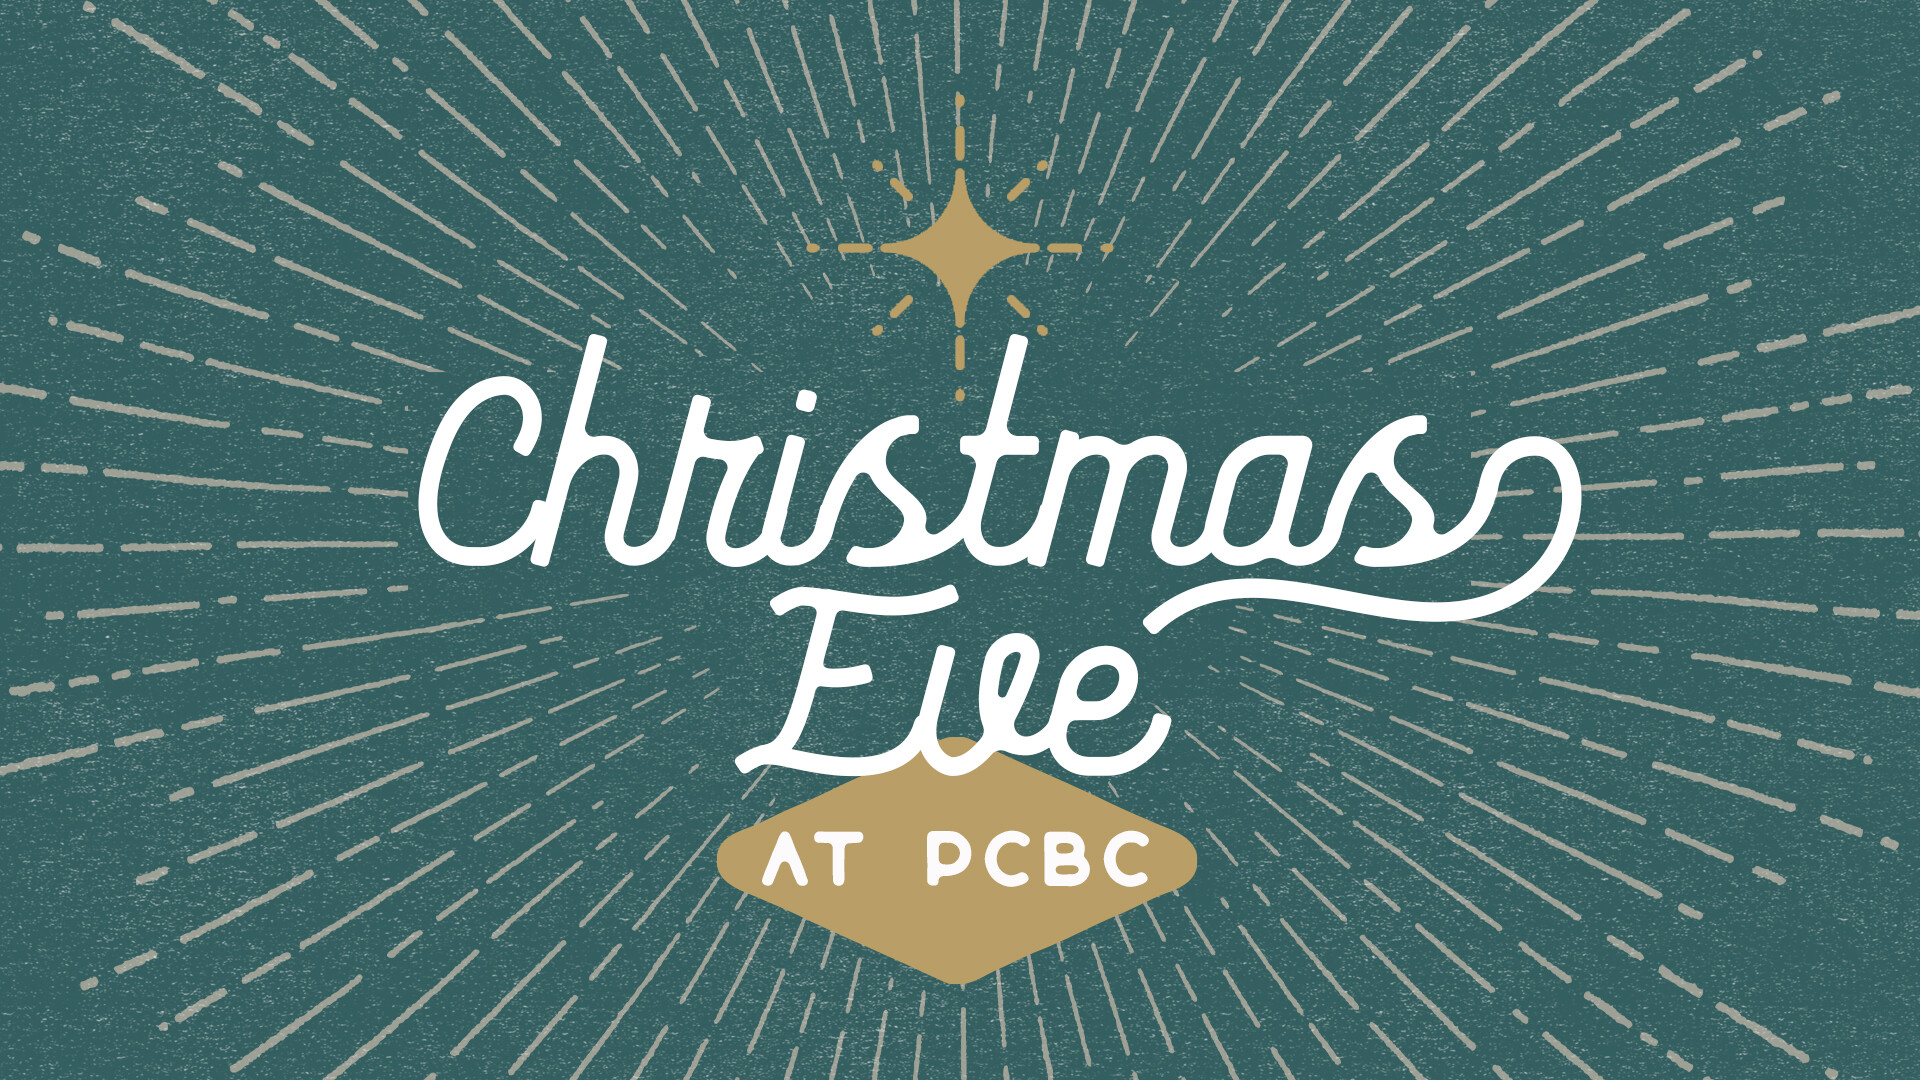 Christmas Eve Services at PCBC - Dec 23